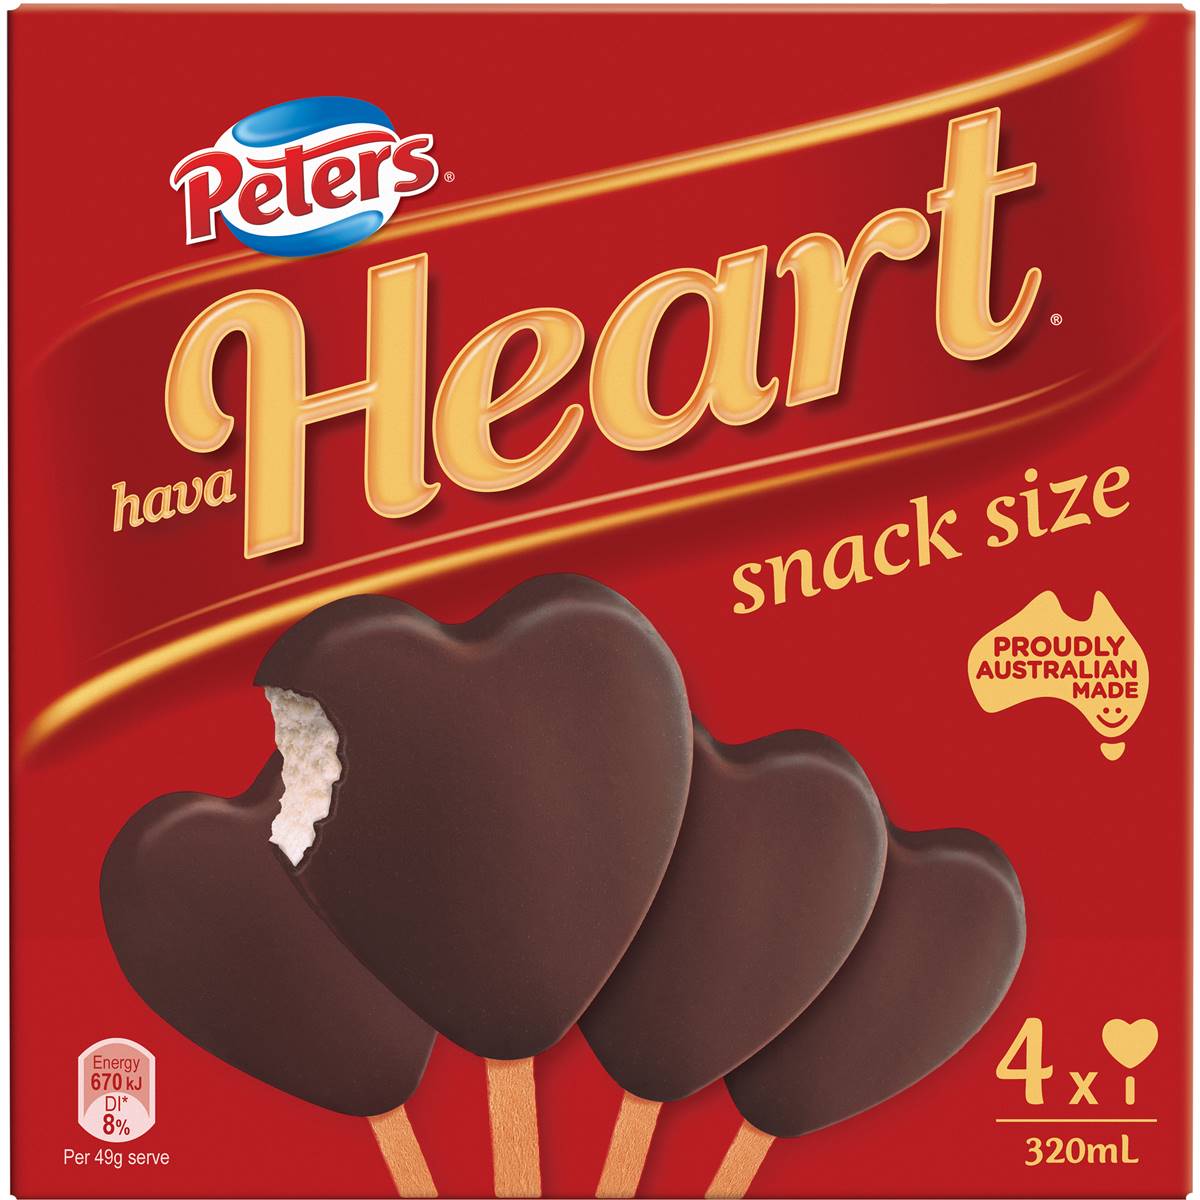 Peters Heart ice cream.jpg